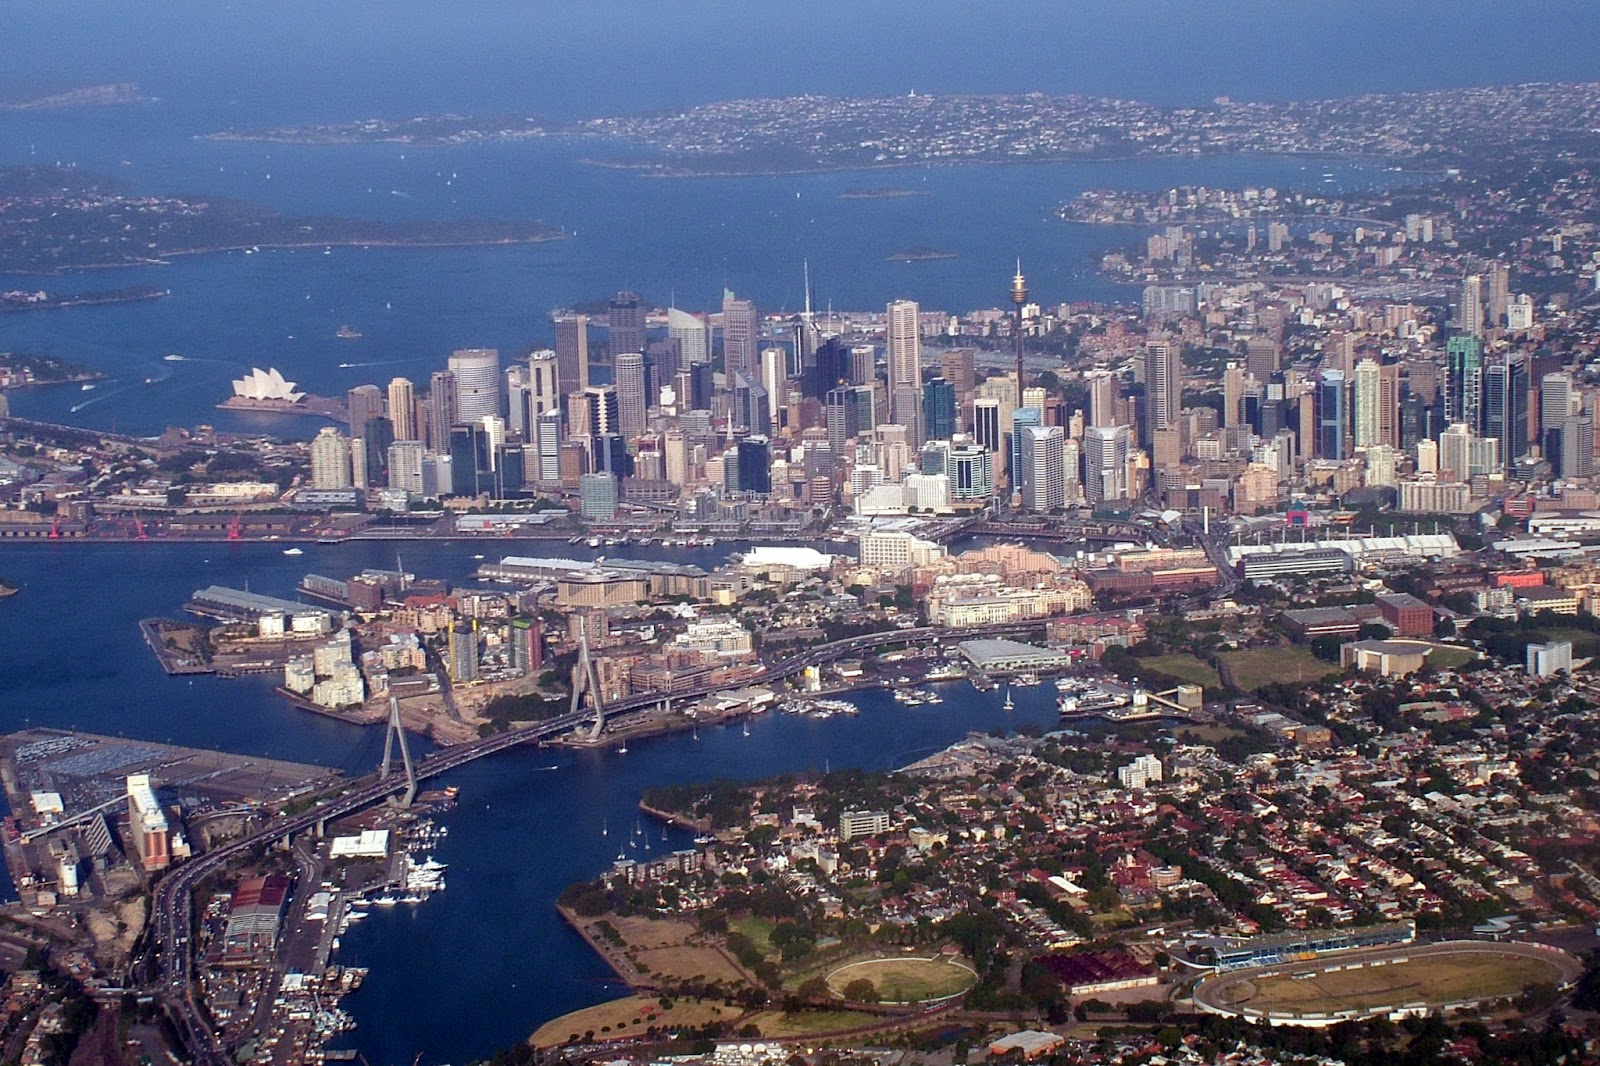 https://blogger.googleusercontent.com/img/b/R29vZ2xl/AVvXsEi-6UeidGfVi3x4yWkXHlr4AsFhc3PrO9vUI0lV32m7Hb9PDlTdNOwY7SFMeQZLzFoc0J0tnhknMl9hHA9iCvc34yo7eC3NhM7shkYuvSrUXIa6rzxpUmVWLR96ElEOI7YG9EcA02KInhQ1/s1600/Sydney+skyline+from+above.jpg